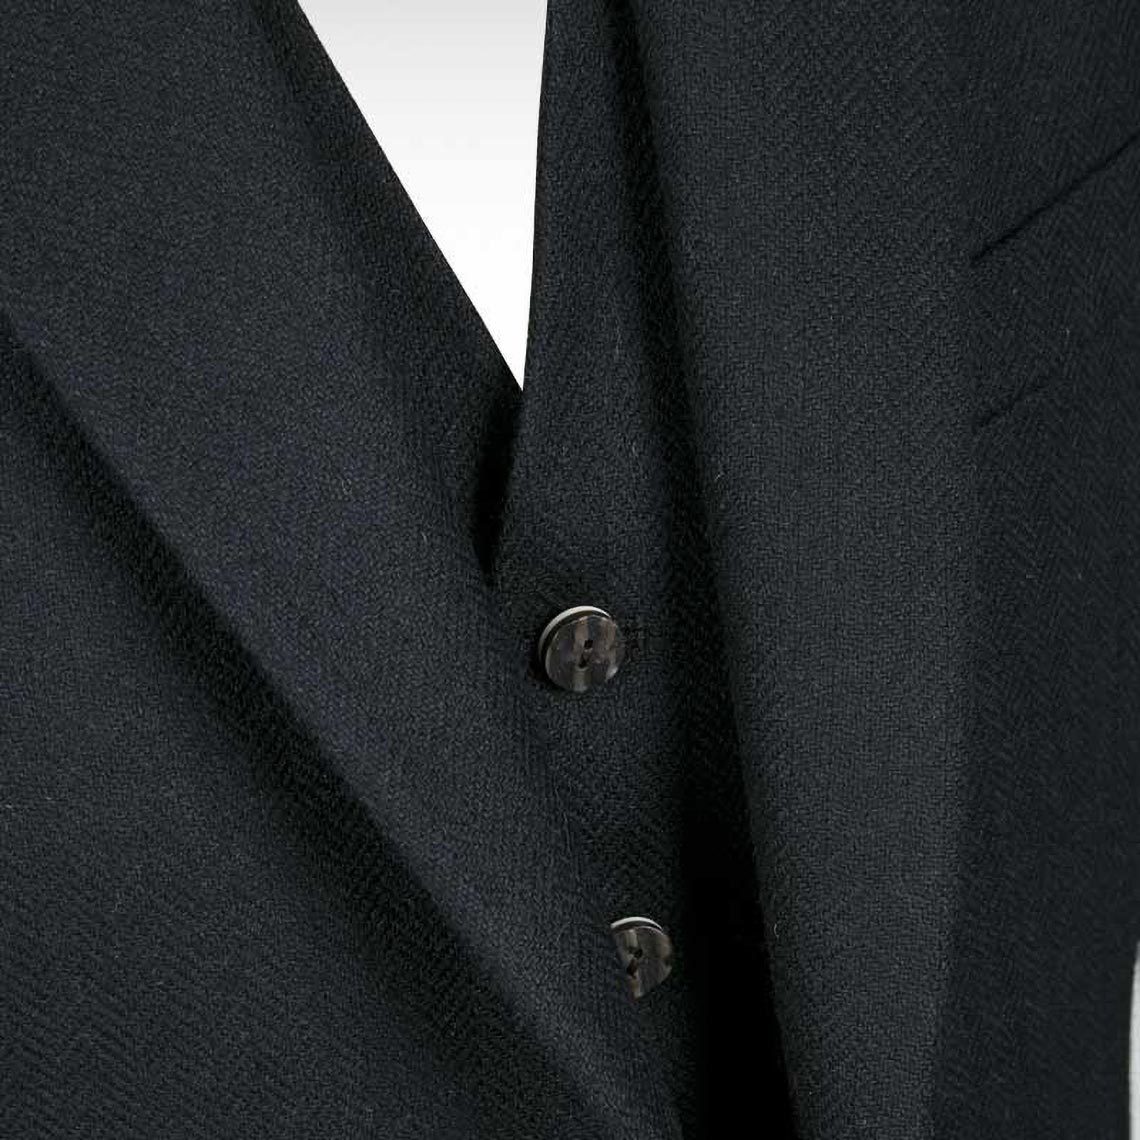 Black Crail Jacket & Waistcoat